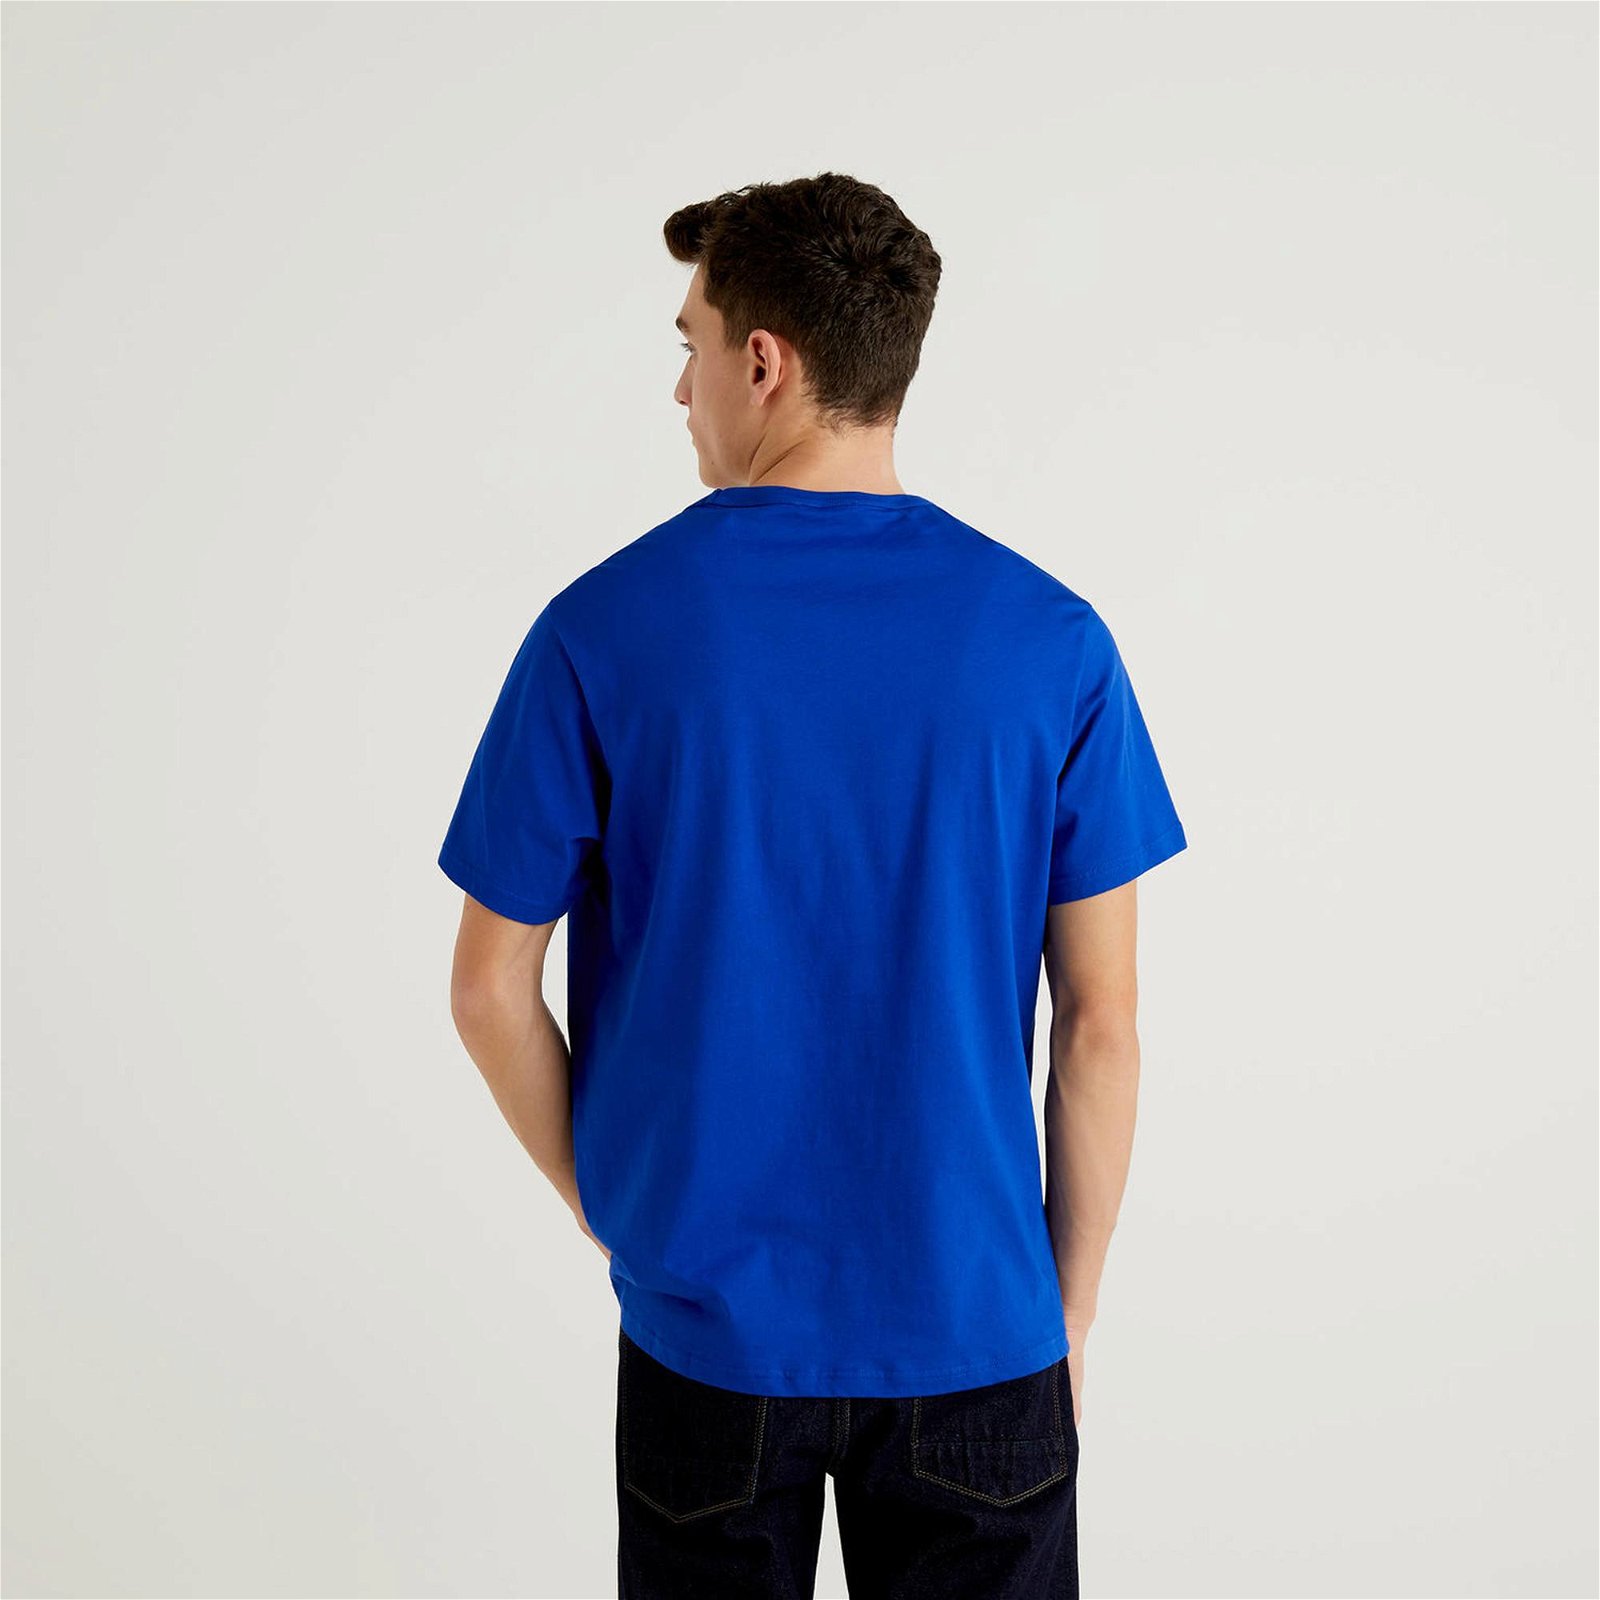 Benetton Erkek Mavi T-Shirt